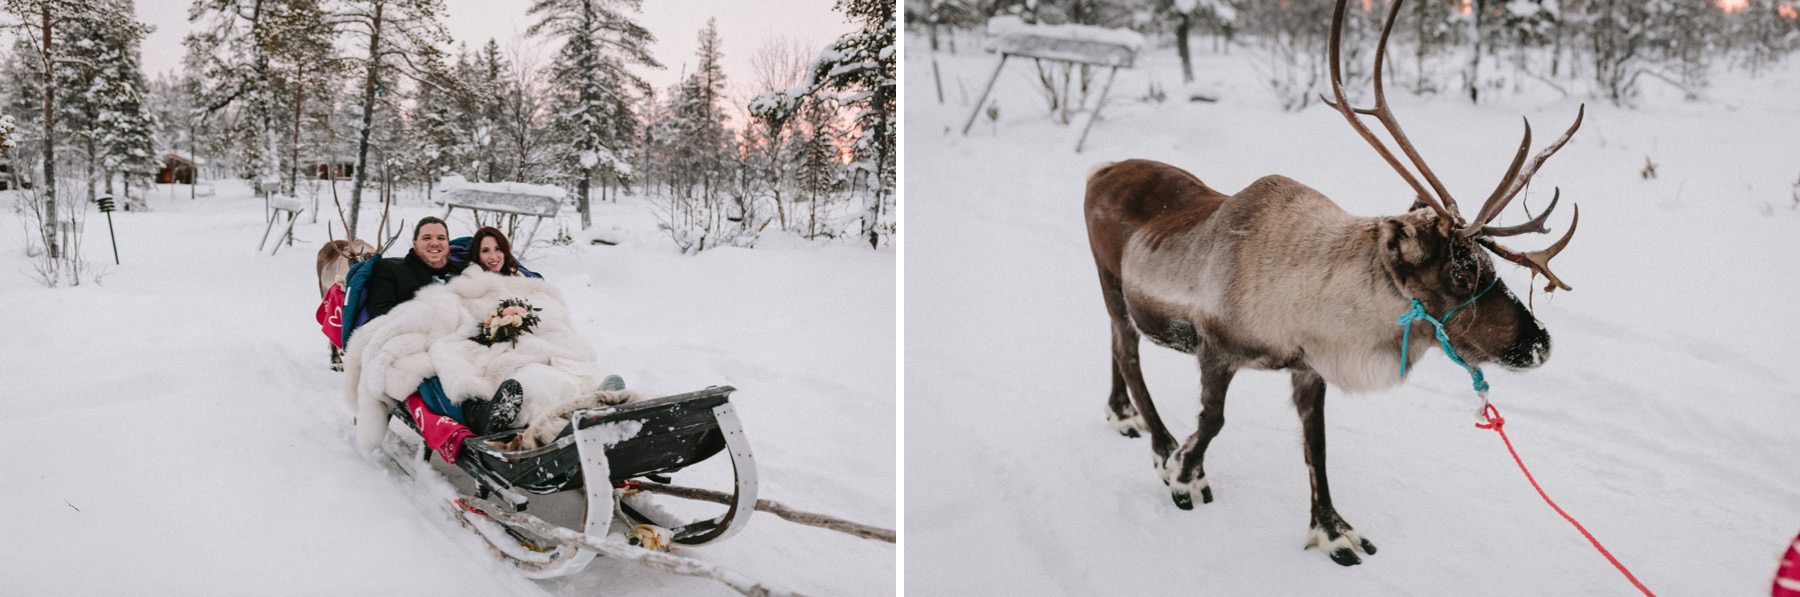 reindeer sleigh wedding